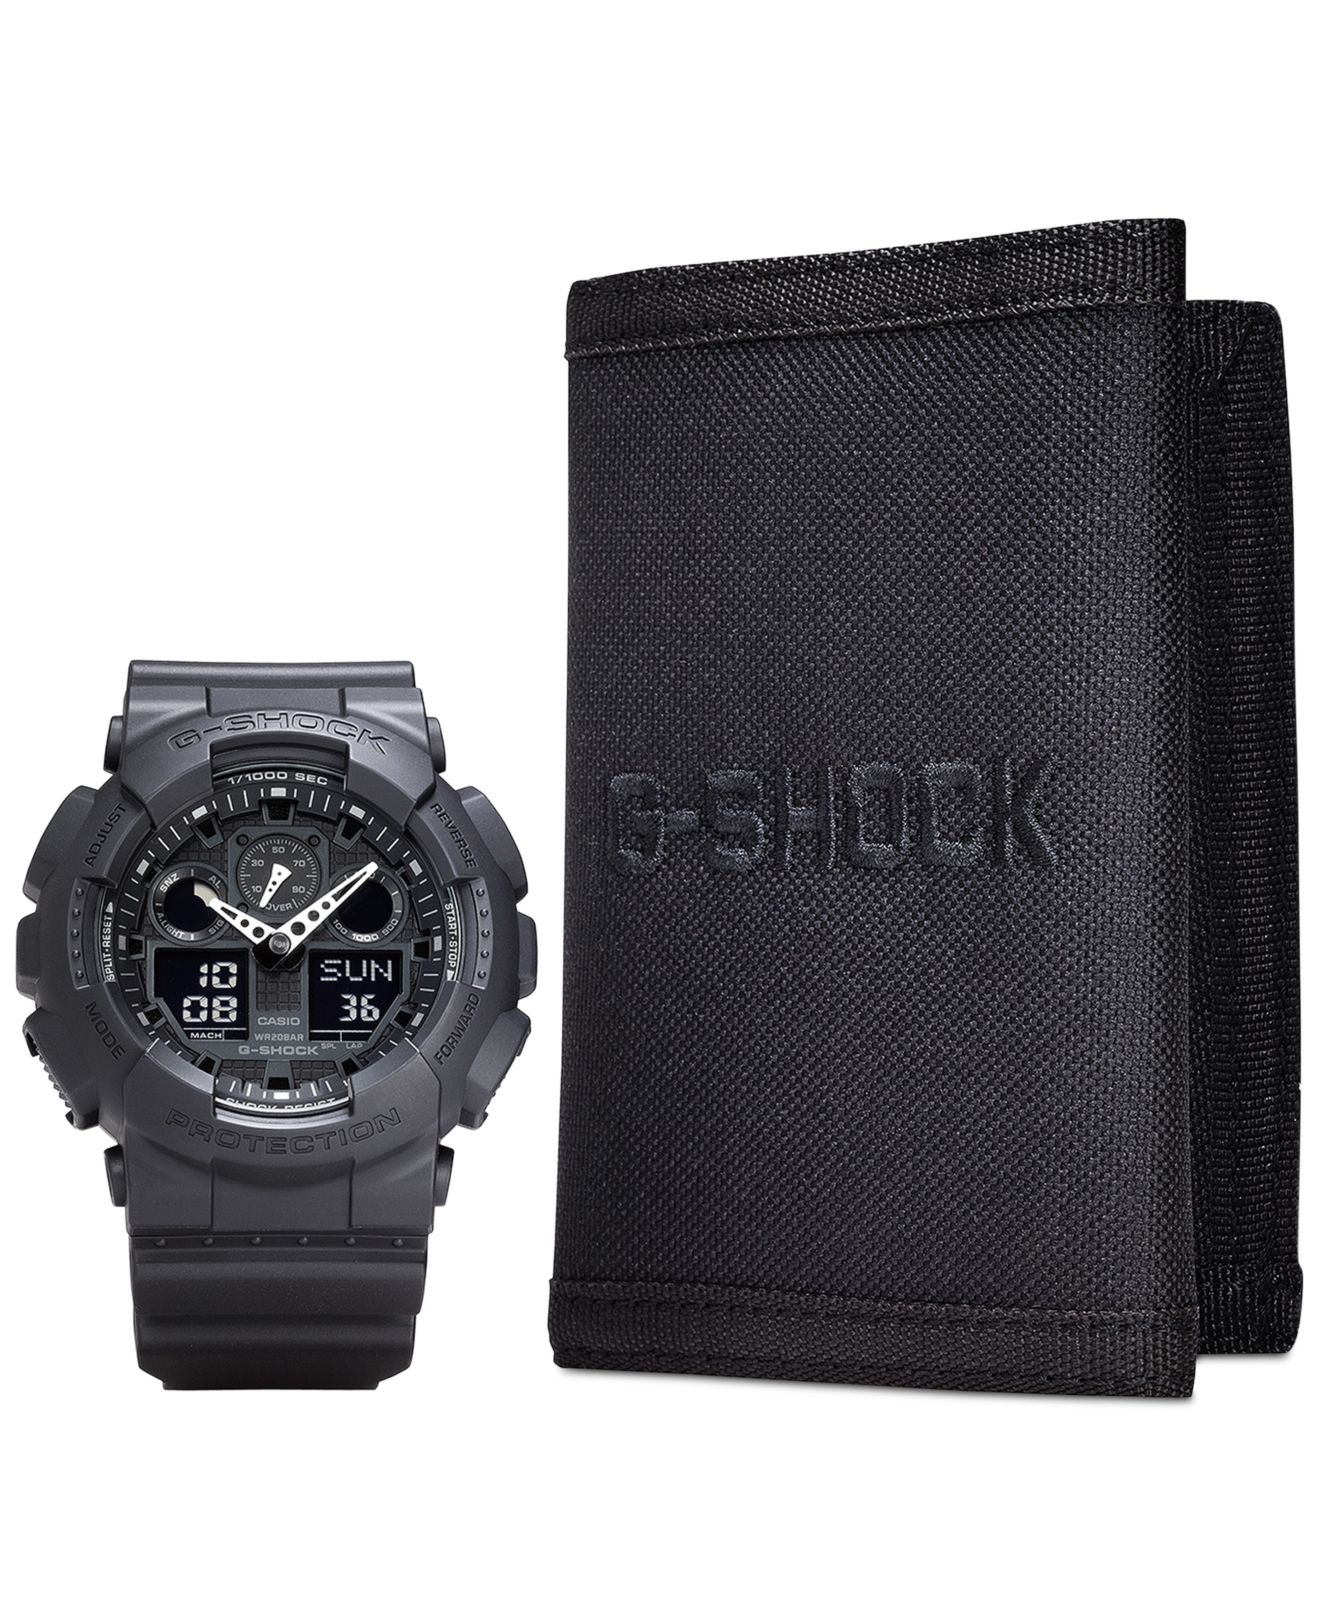 G-Shock Synthetic Men's Analog Digital Black Resin Strap Watch And Wallet  Gift Set 55x51mm Ga100-1a1bob for Men - Lyst